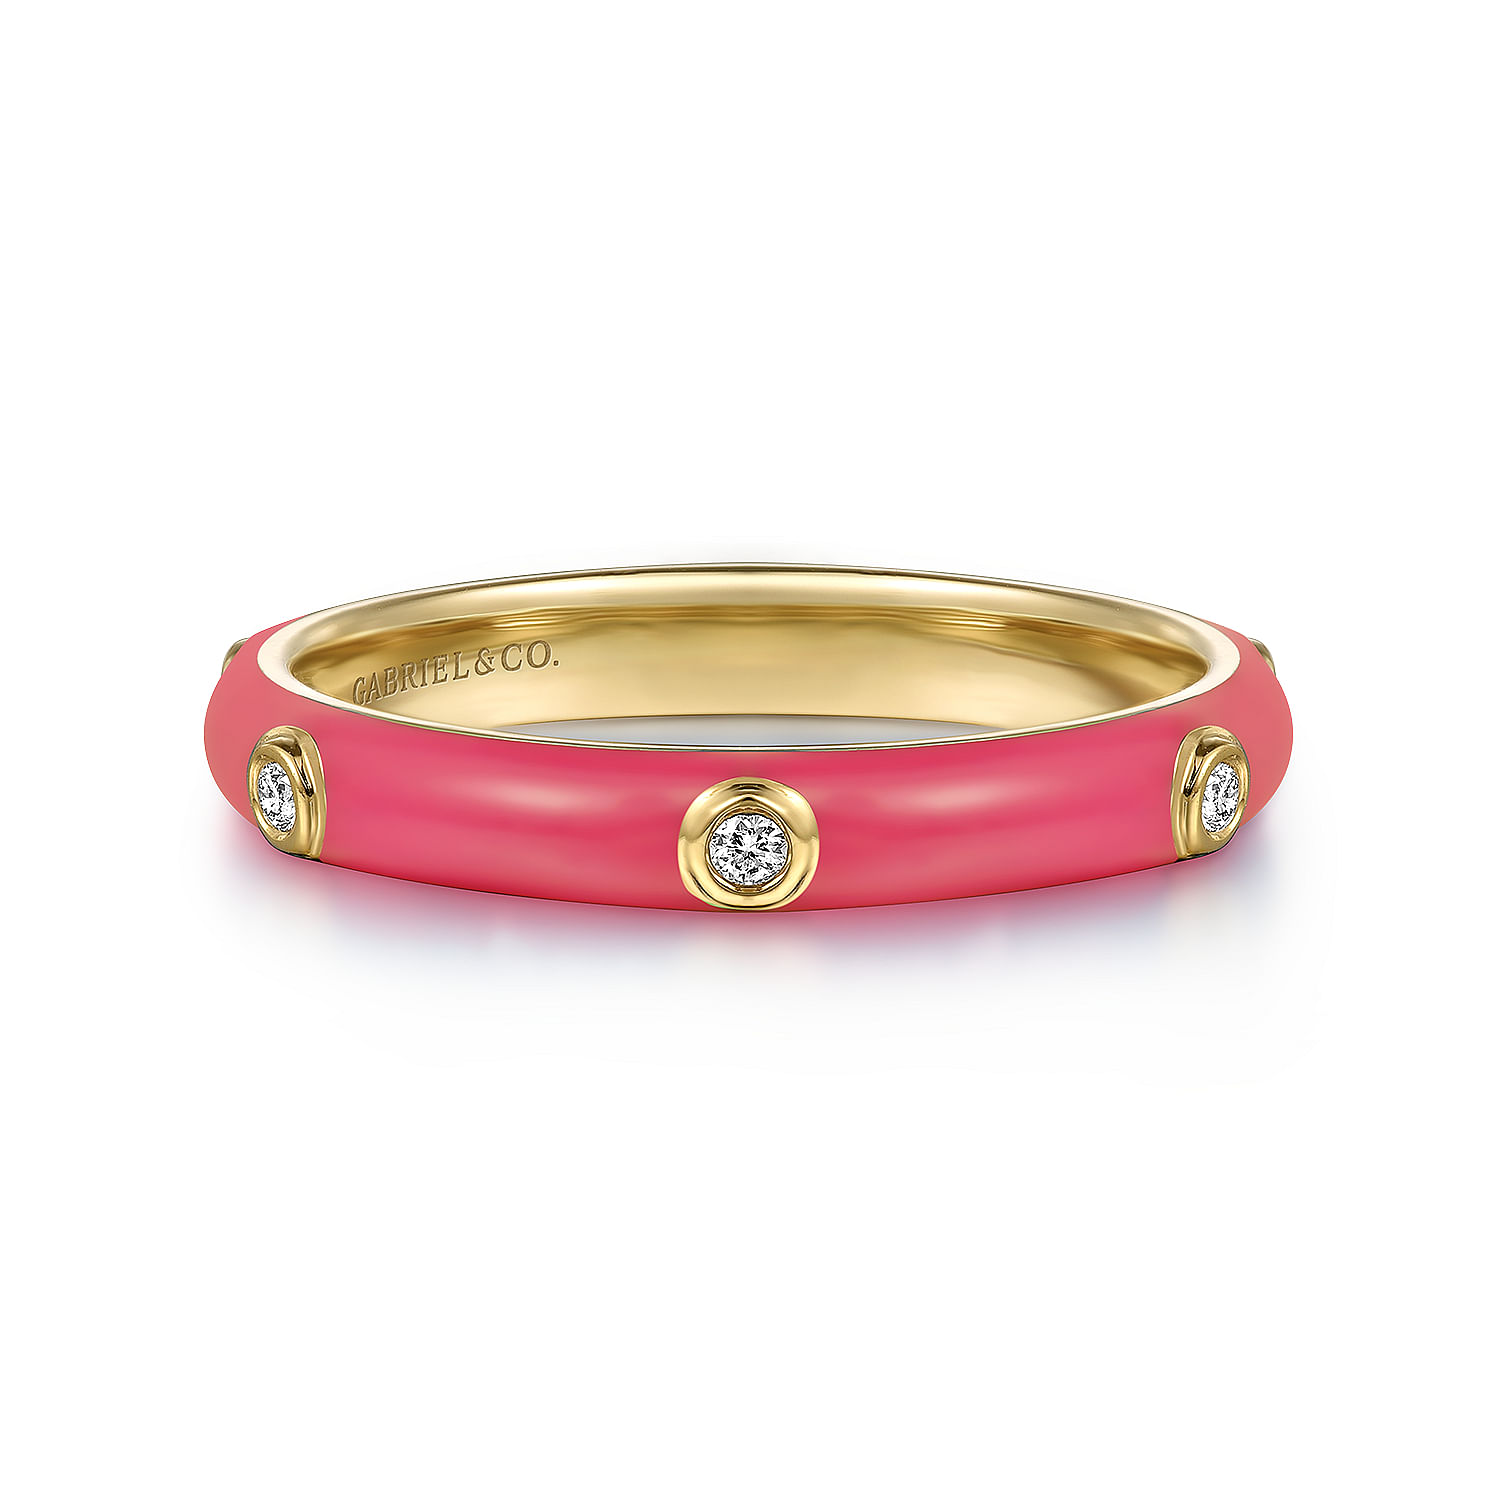 Gabriel & Co. 14K Yellow Gold Diamond and Pink Enamel Ring